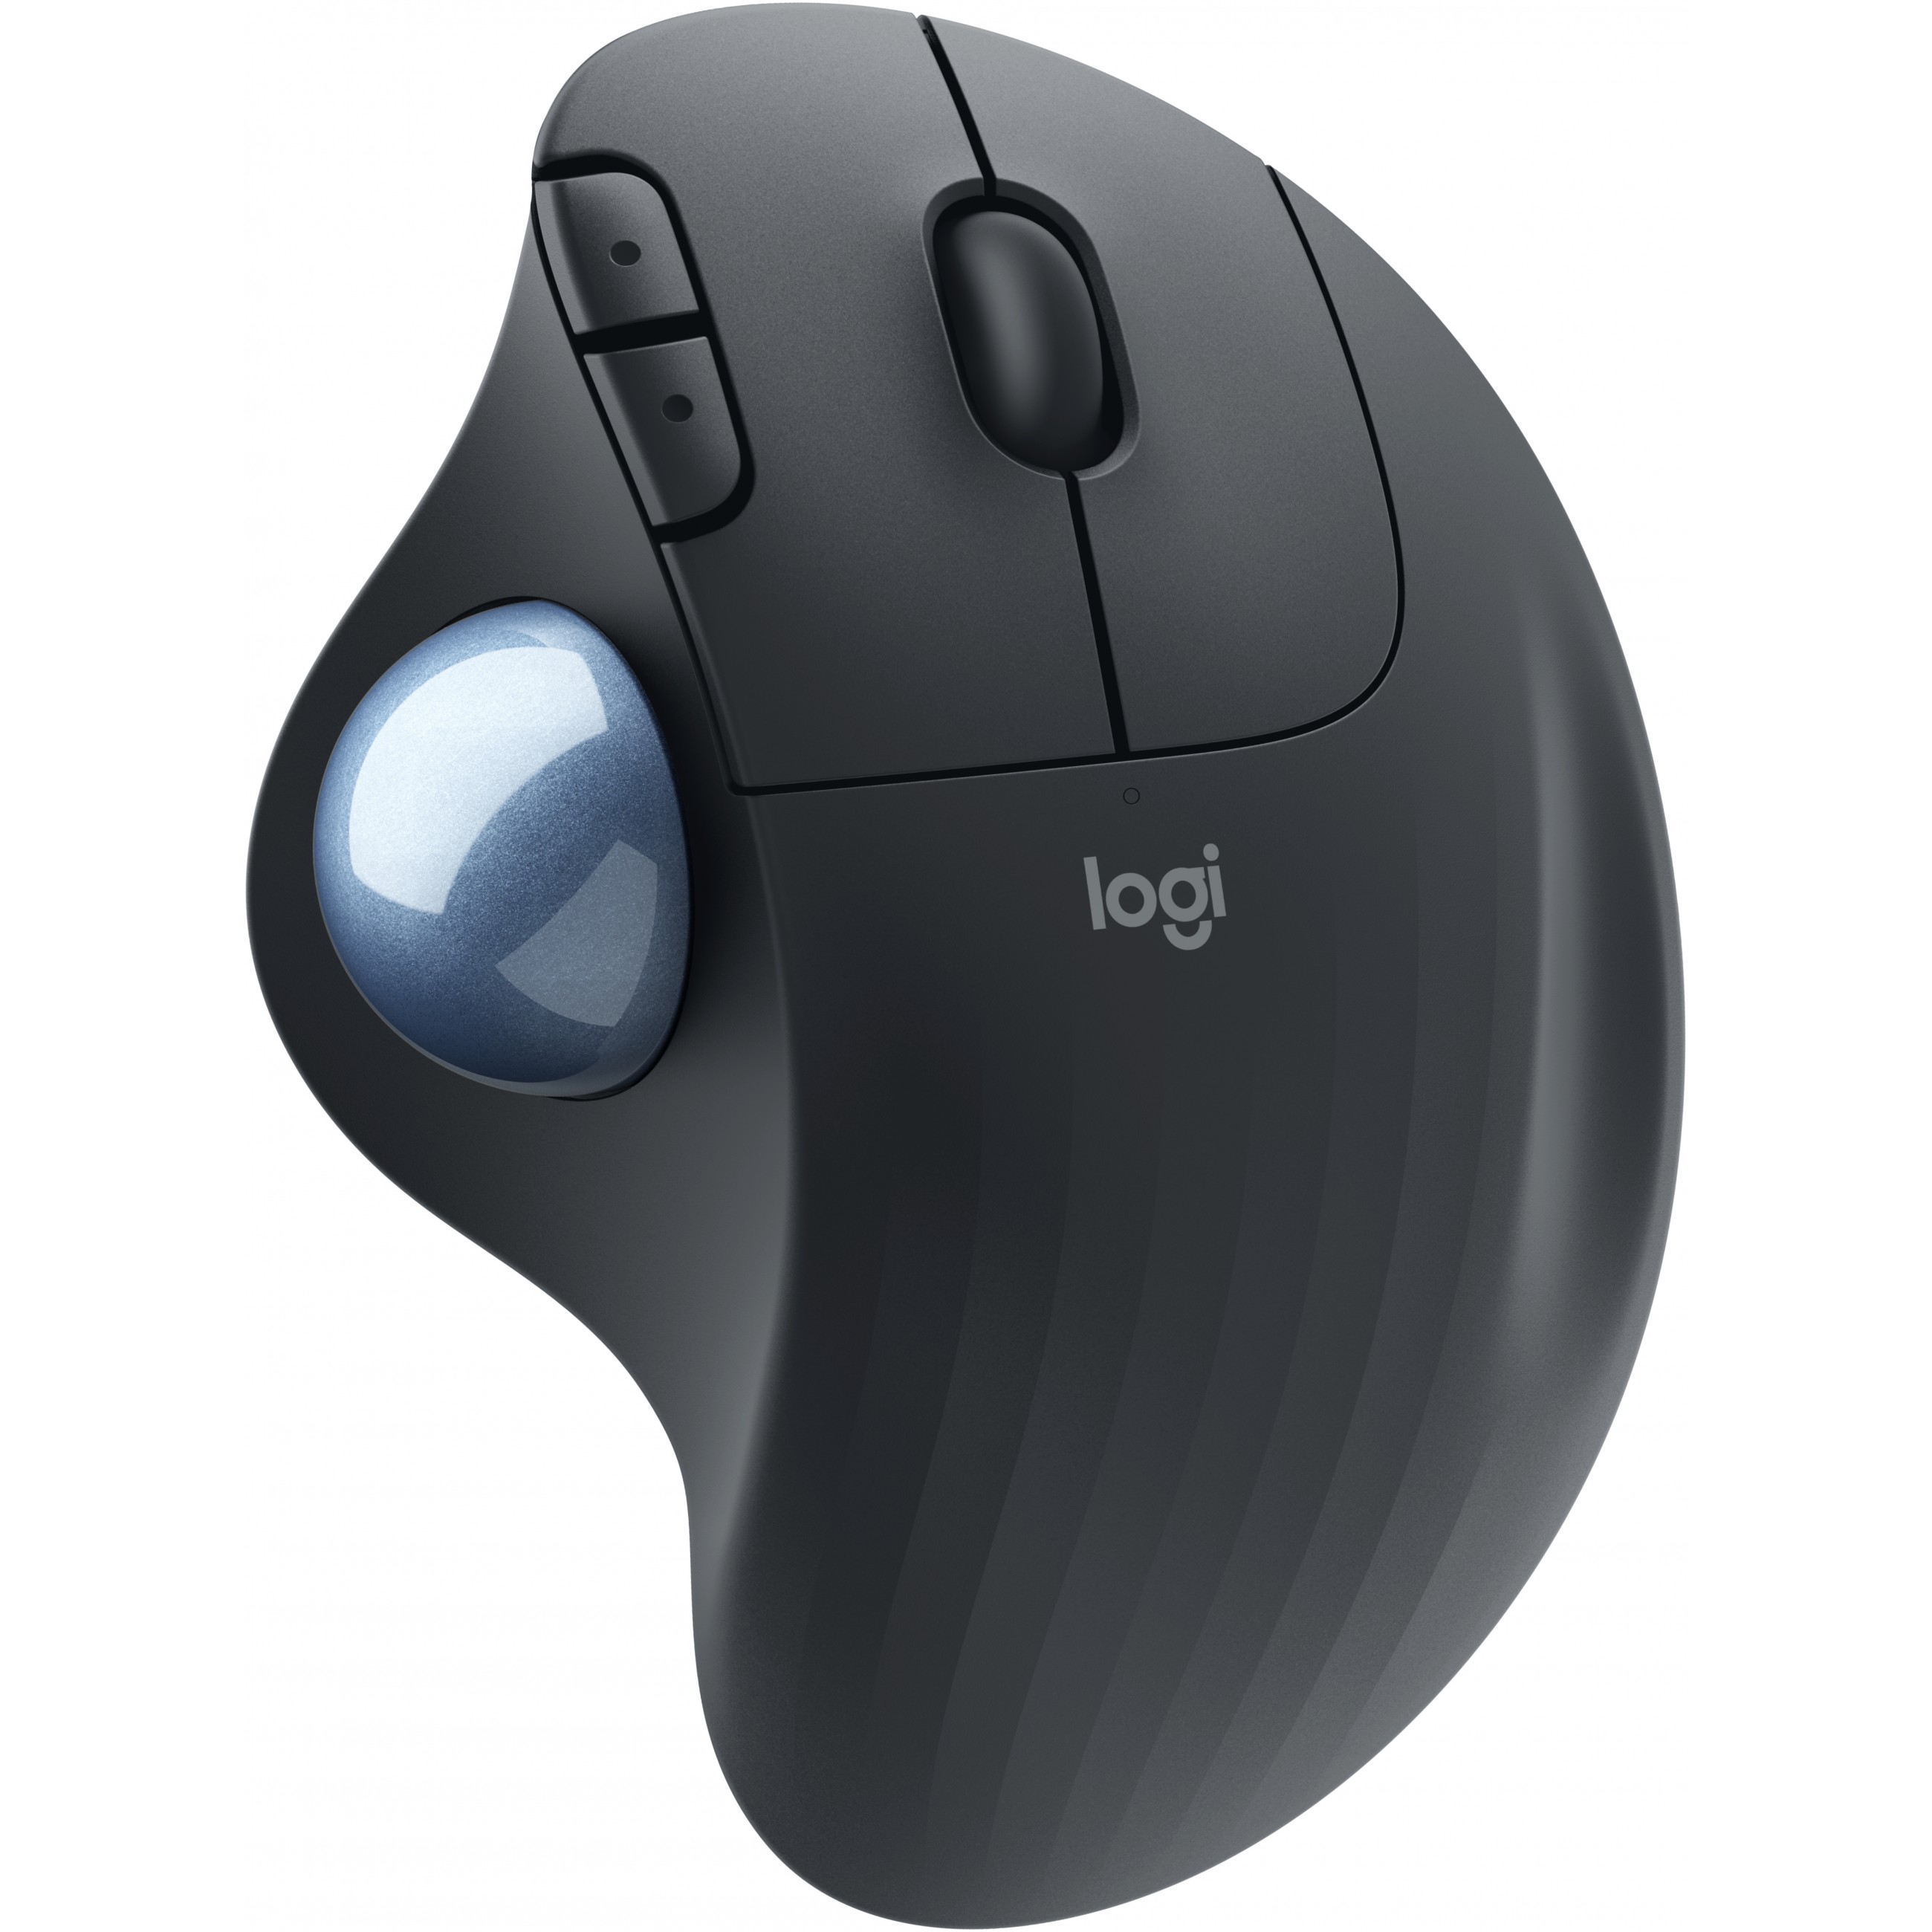 Logitech ERGO M575 for Business mouse